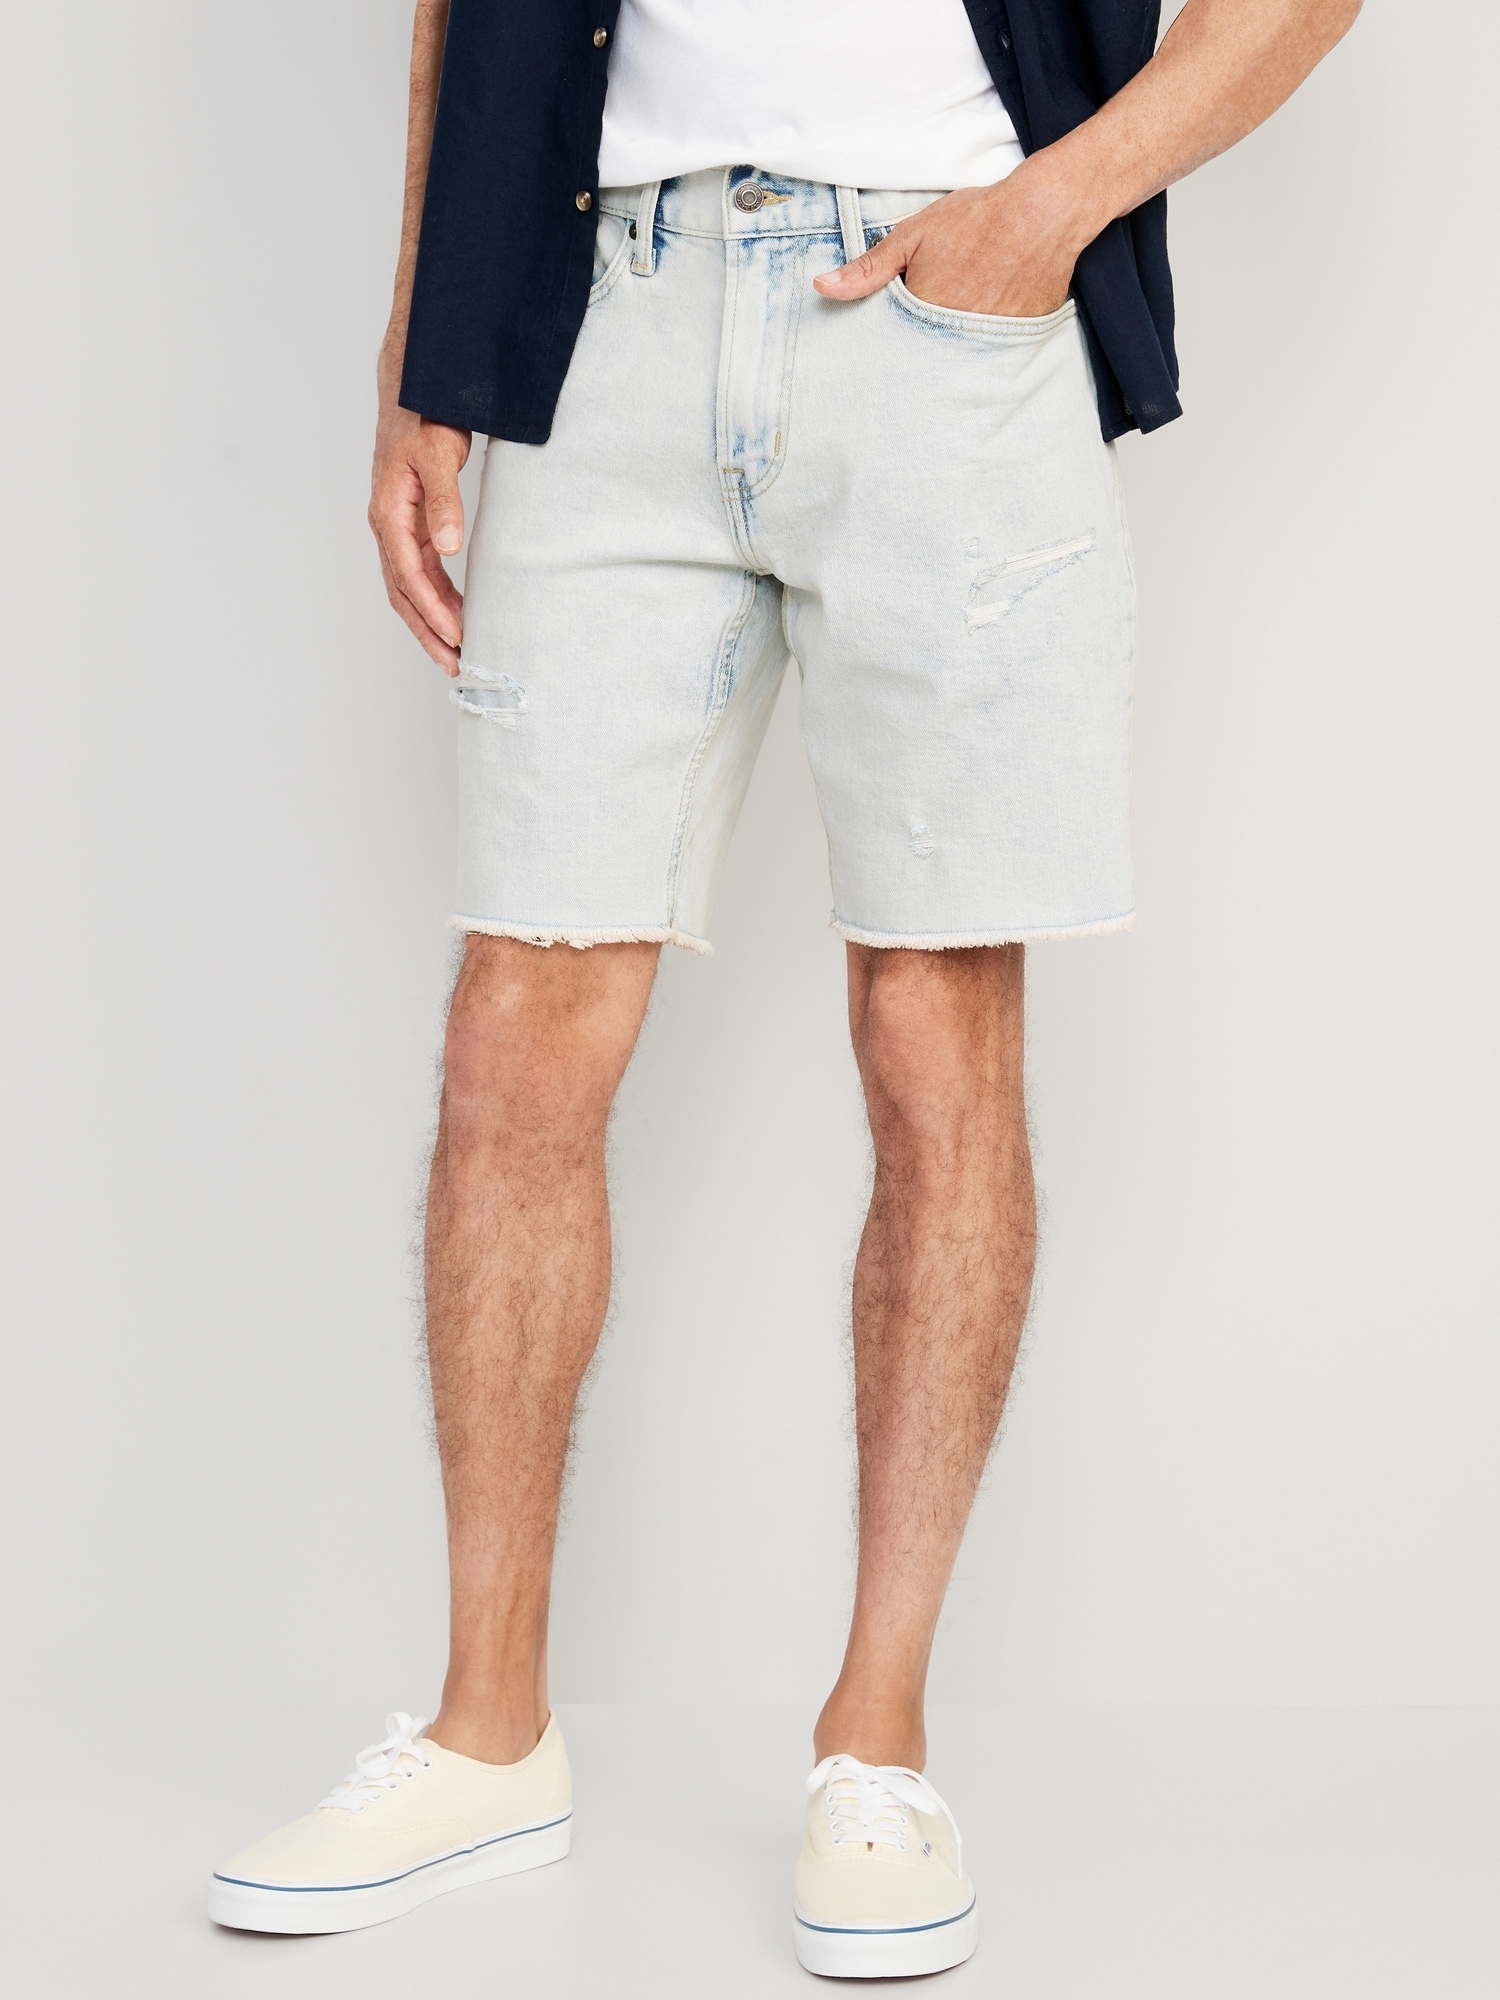 Old Navy Slim Built-In Flex Cut-Off Jean Shorts for Men -- 9.5-inch inseam blue. 1